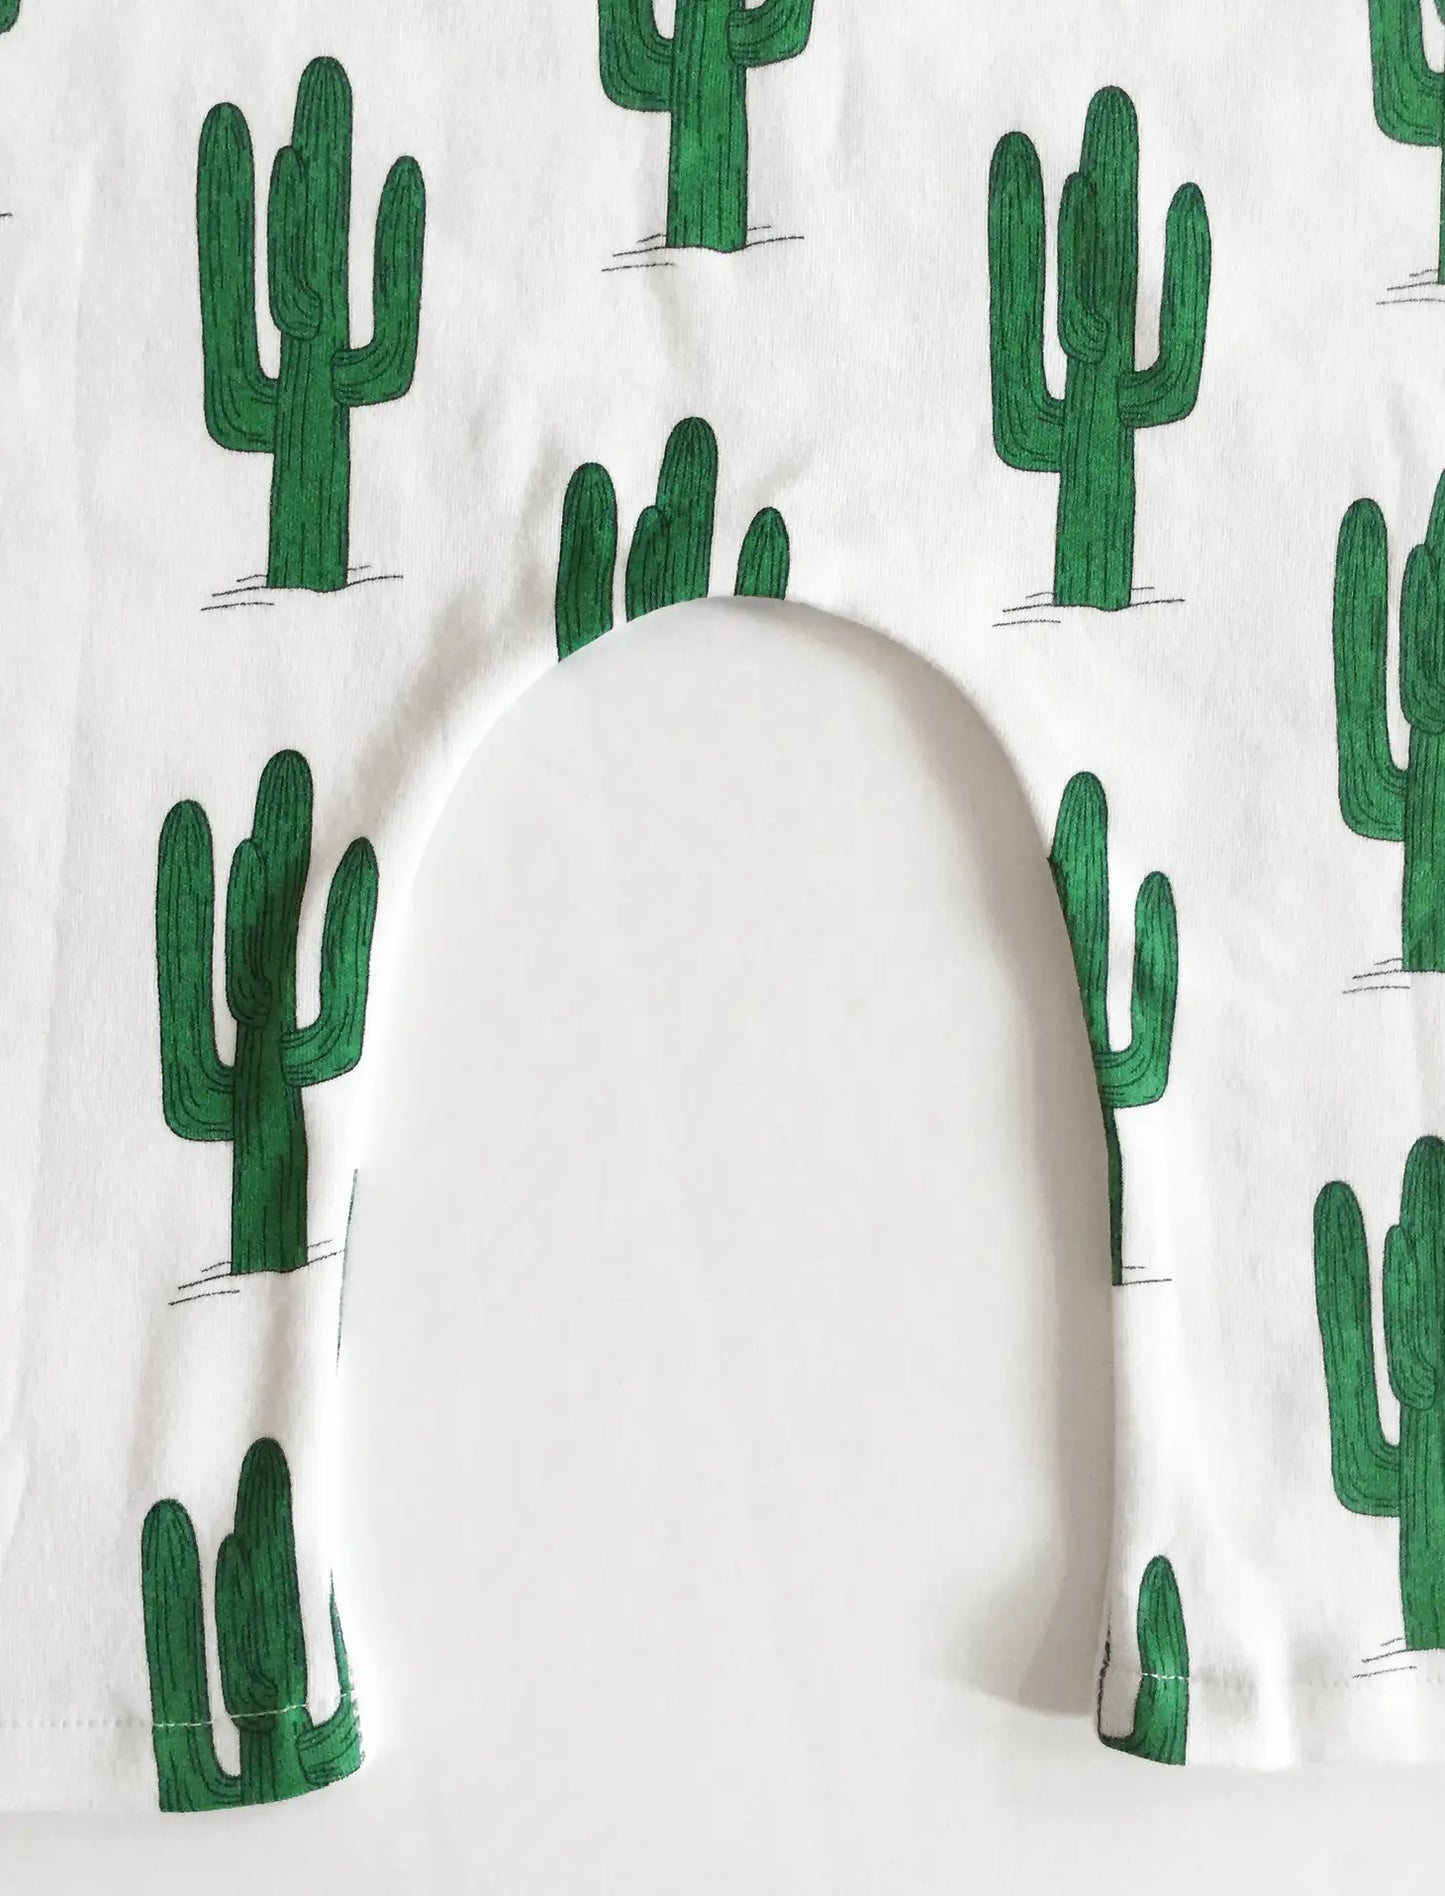 Organic Toddler Racerback Romper - Cactus Print